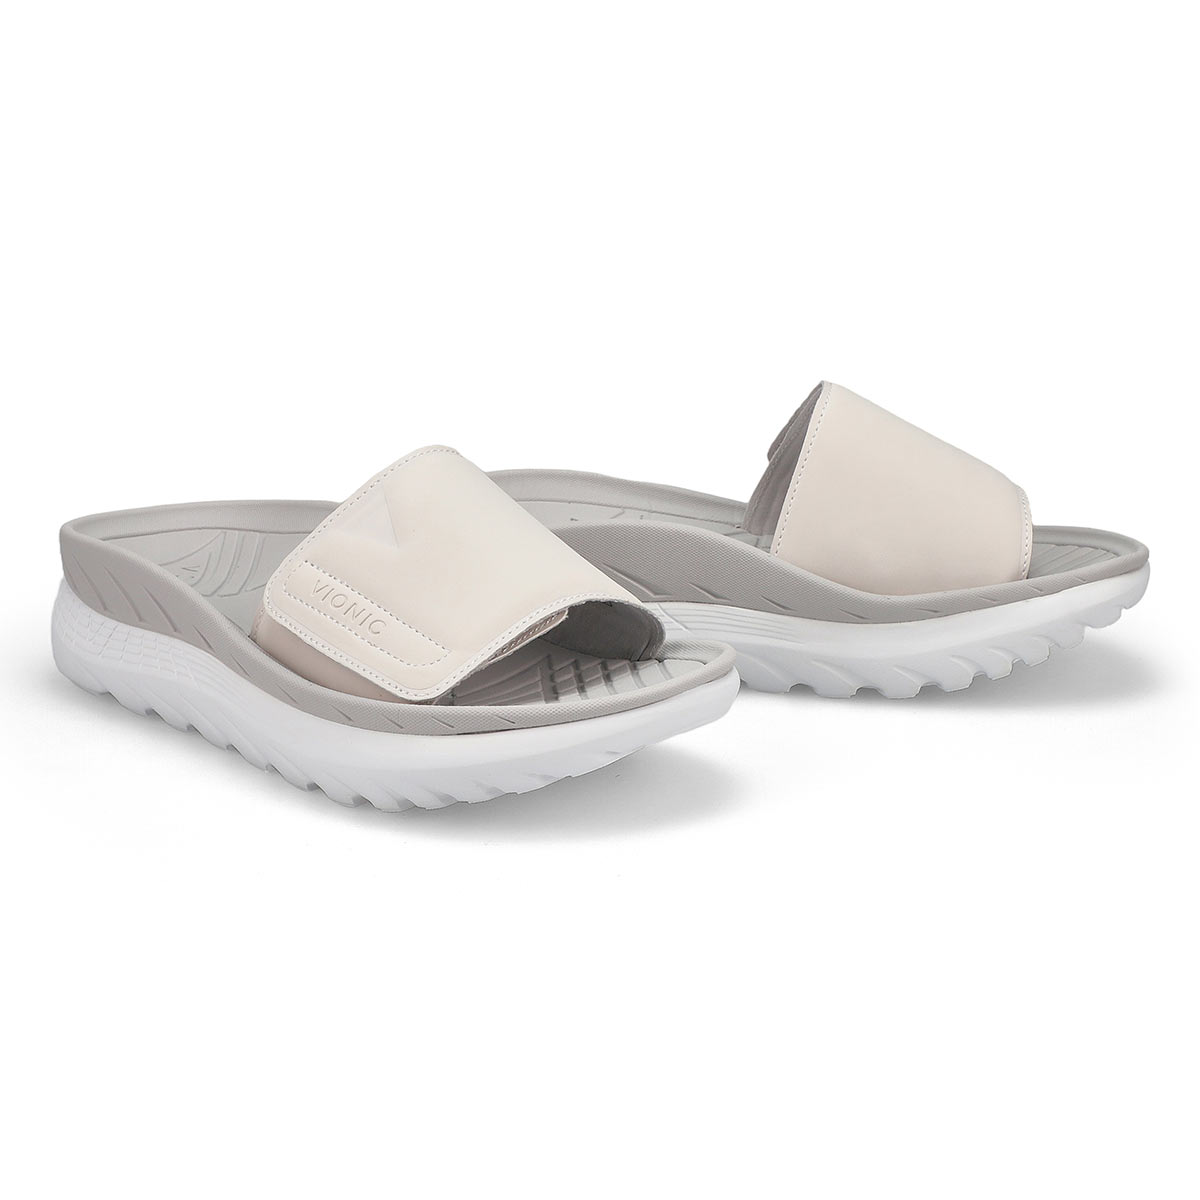 Ladies Rejuvenate Platform Slide Sandal - White